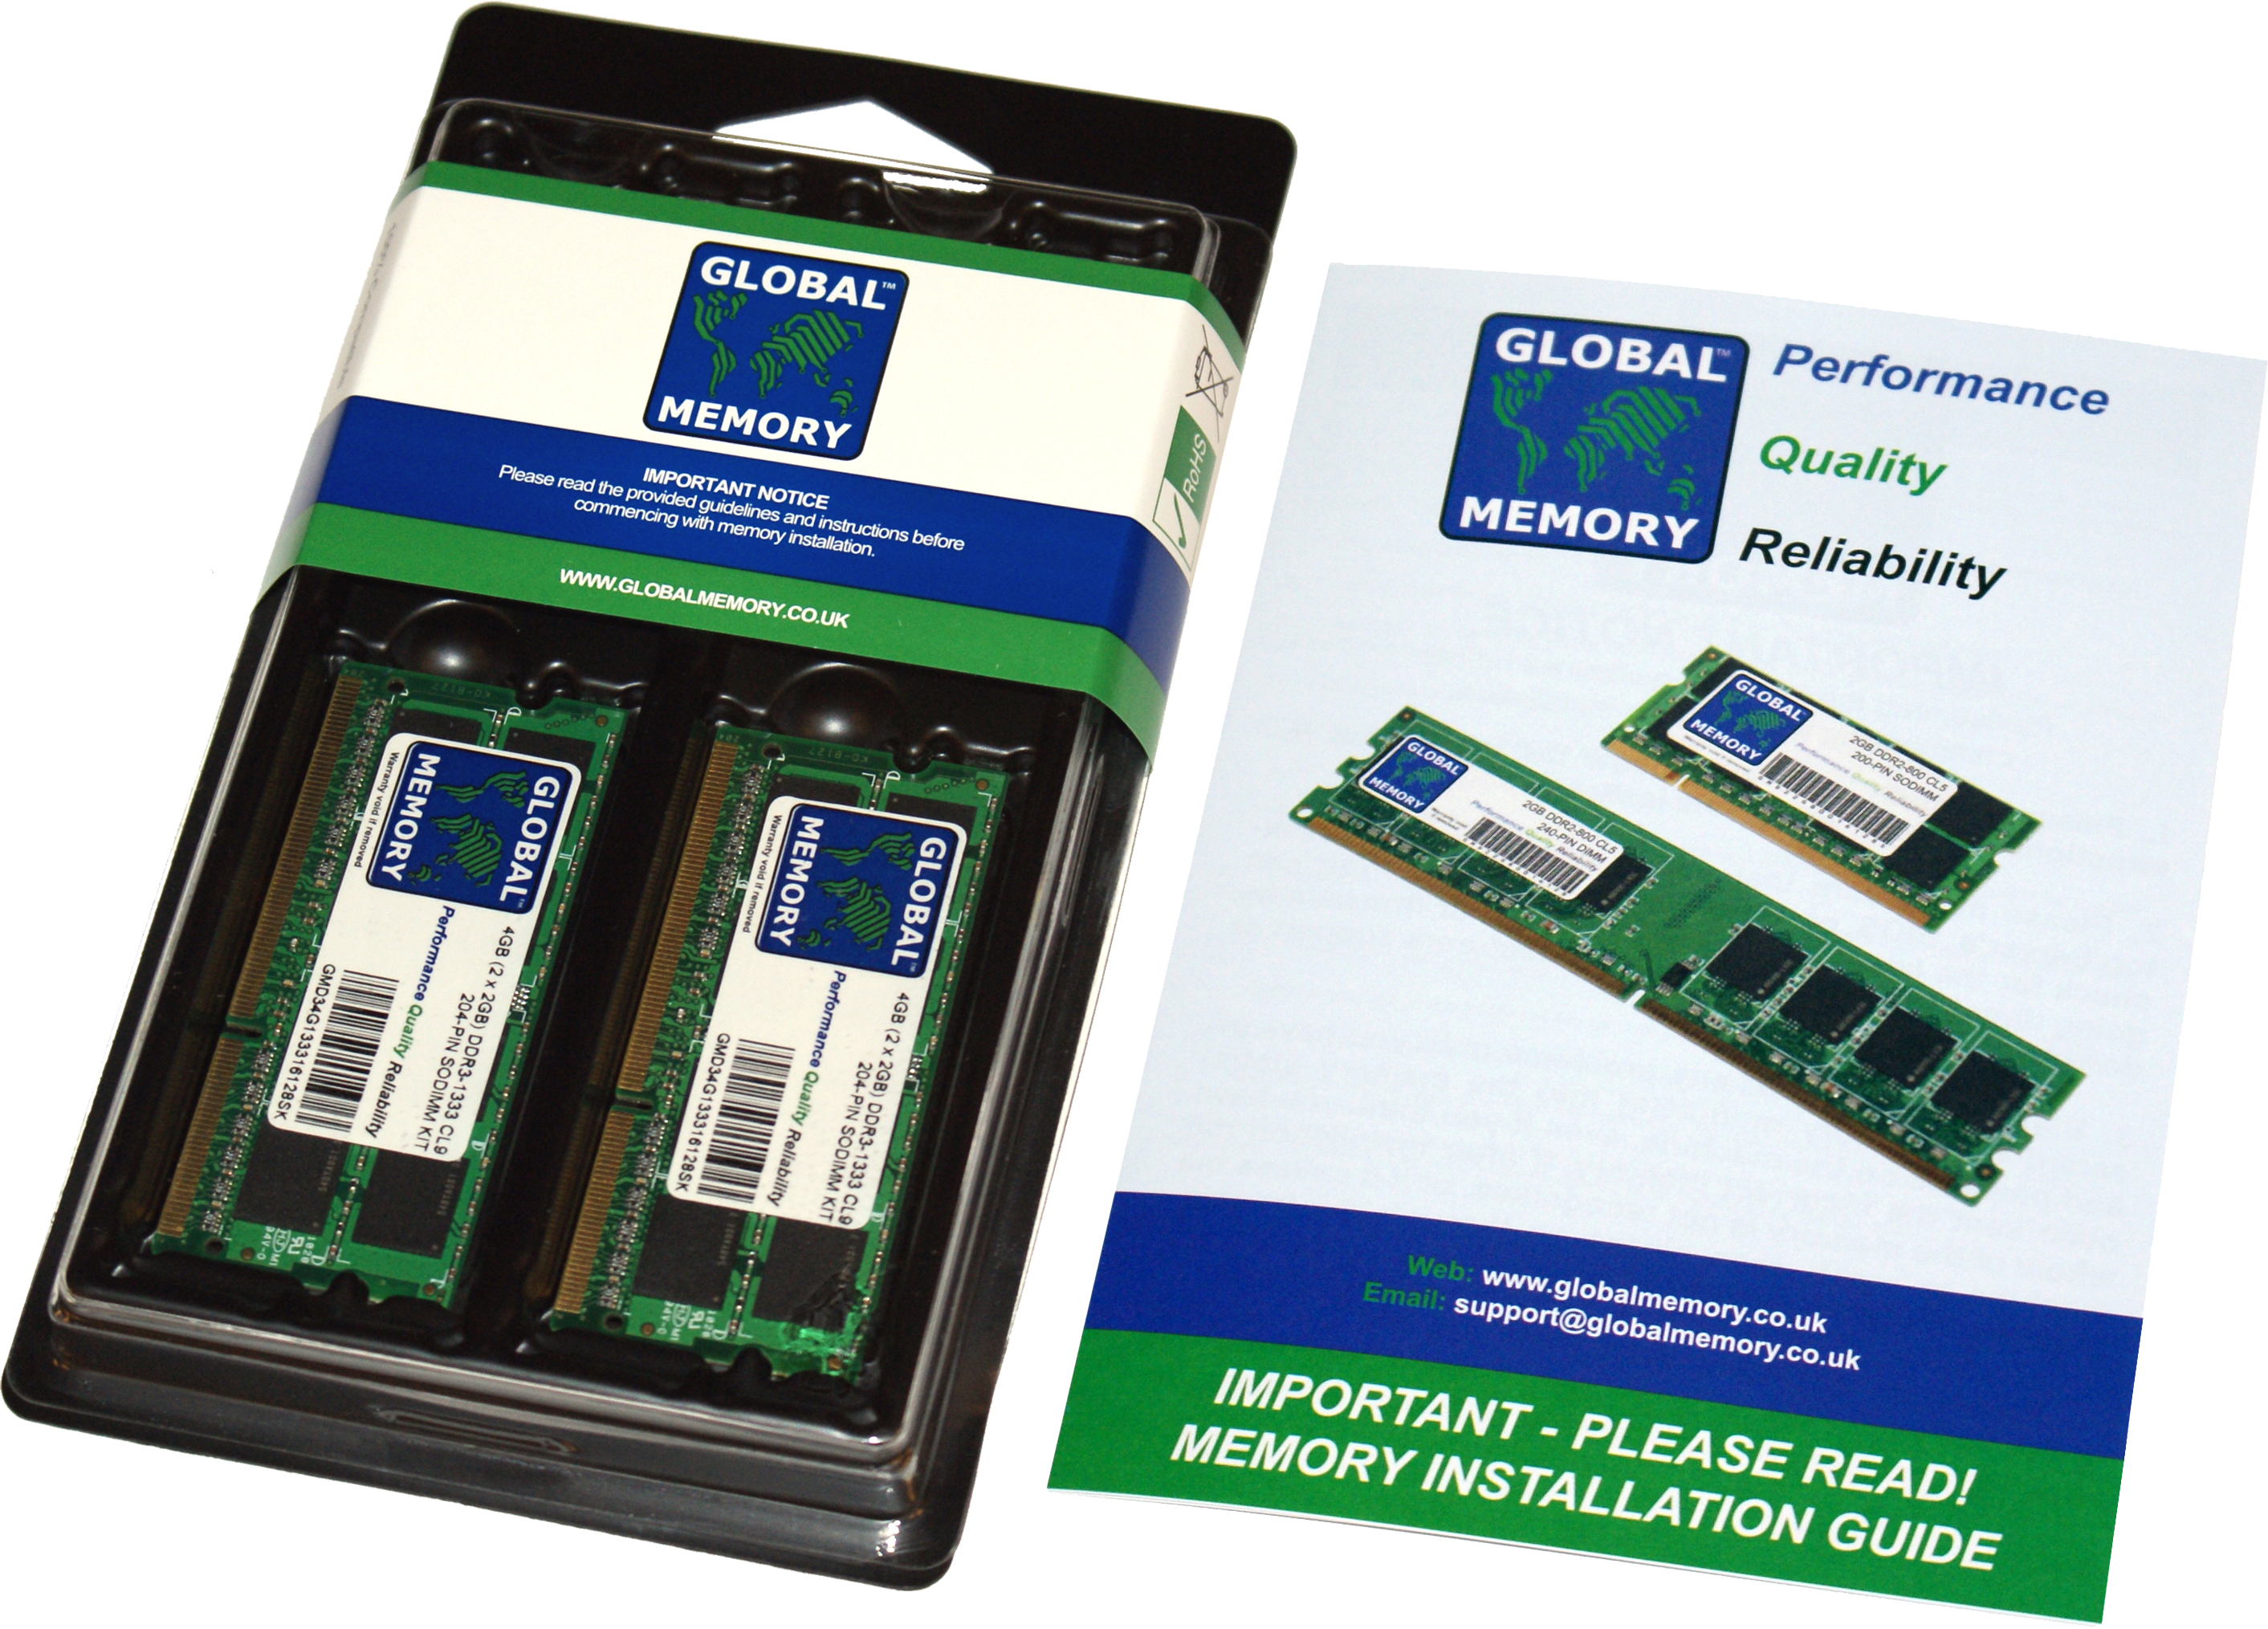 8GB (2 x 4GB) DDR3 1866MHz PC3-14900 204-PIN SODIMM MEMORY RAM KIT FOR SONY LAPTOPS/NOTEBOOKS